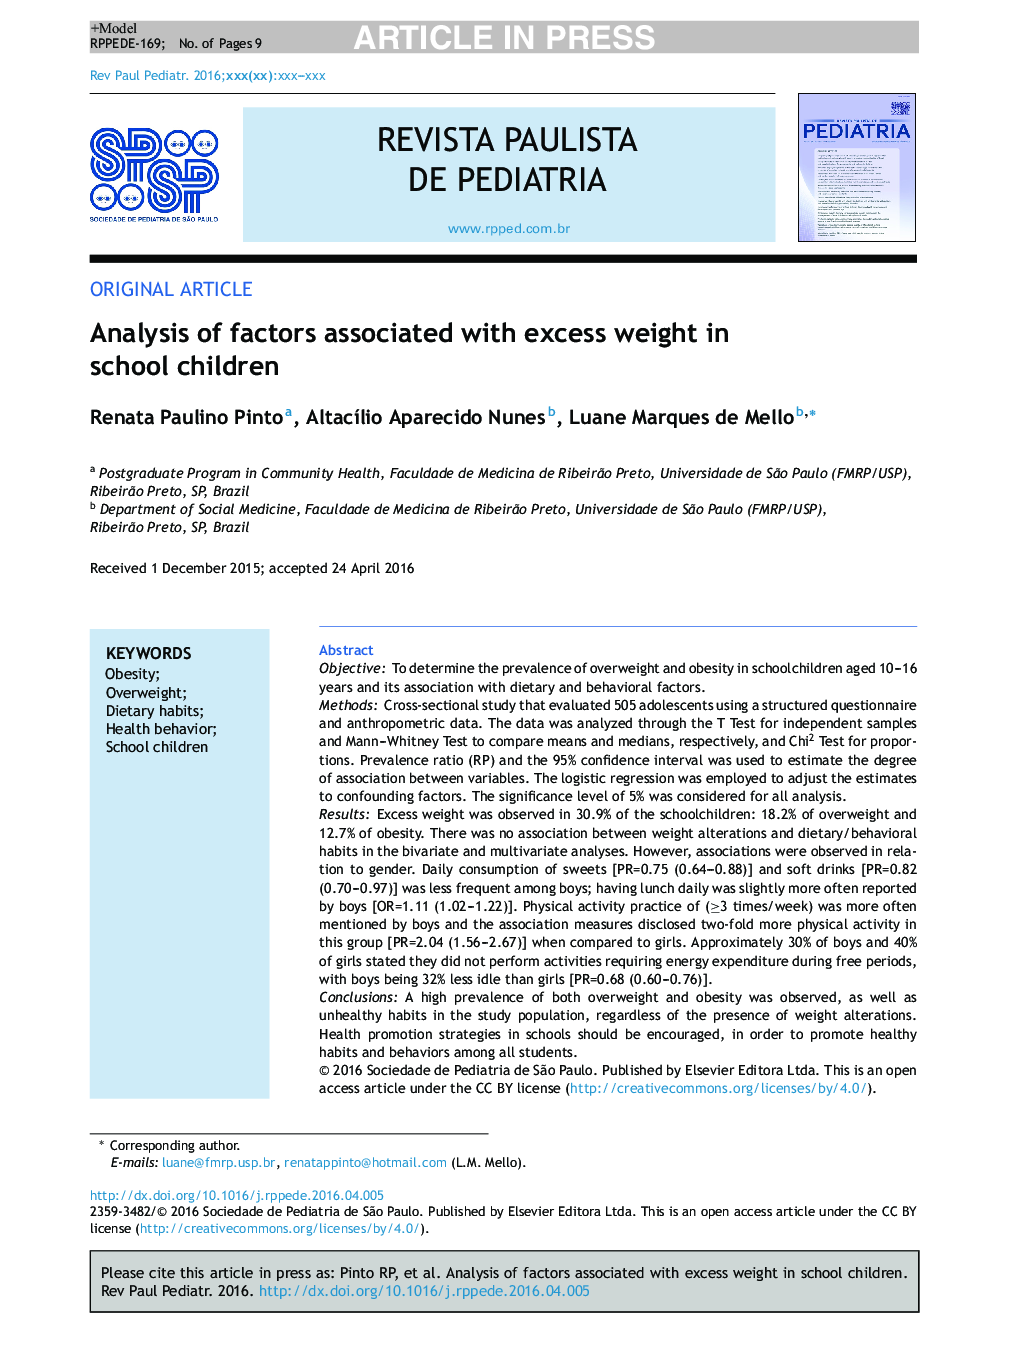 Analysis of factors associated with excess weight in school children